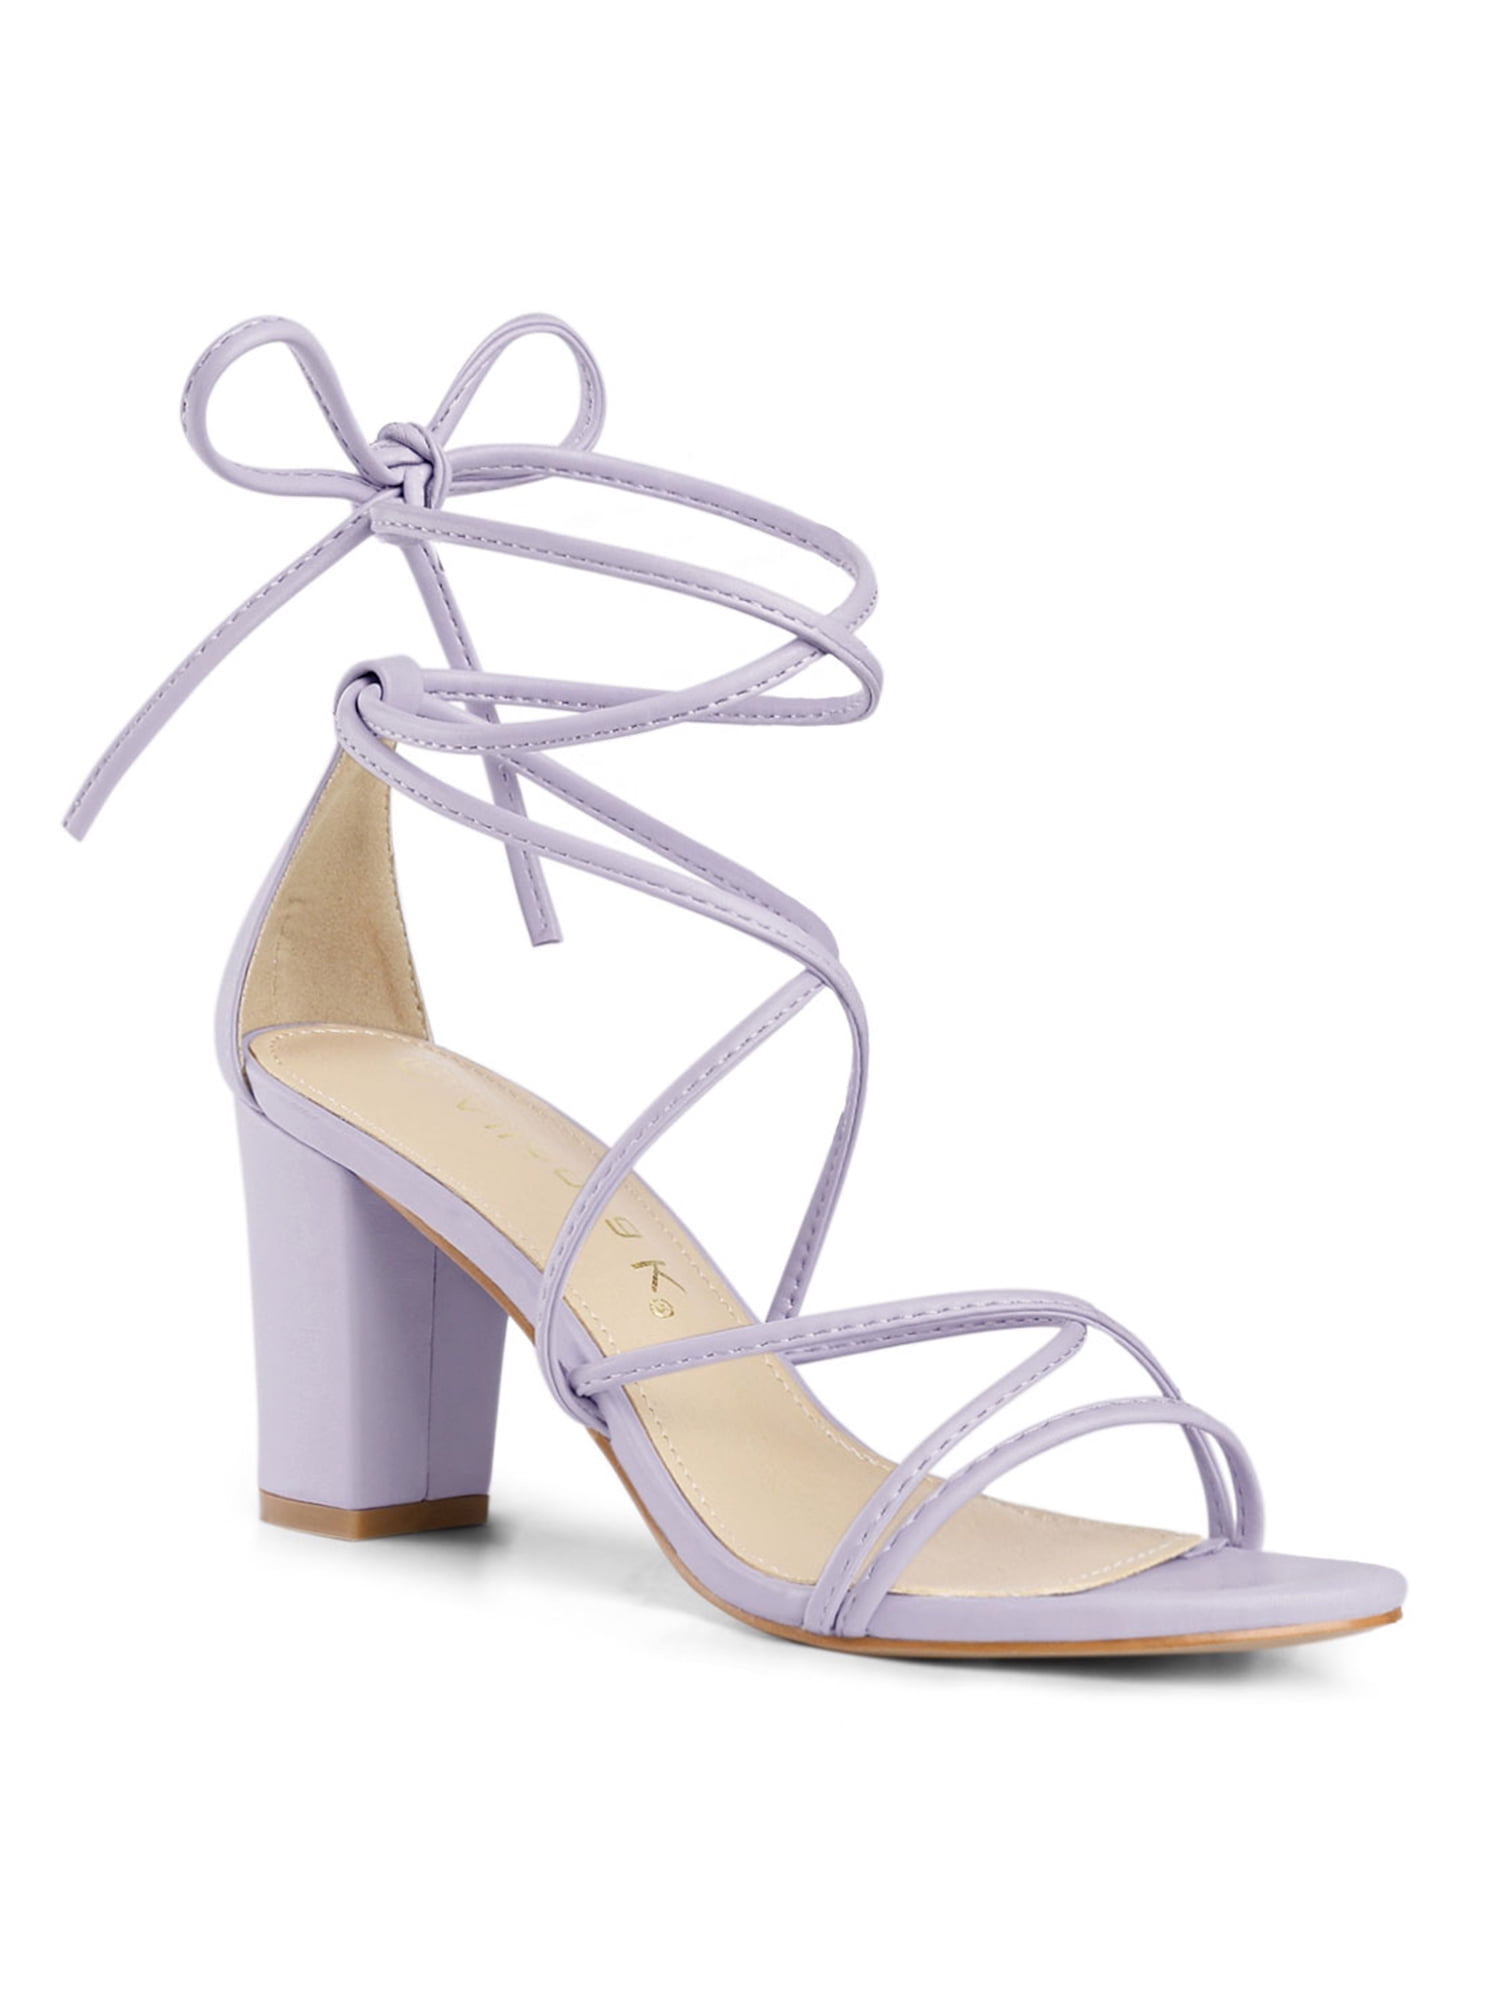 Lilac Patent High Heels - High Heel Sandals - Ankle Strap Heels - Lulus